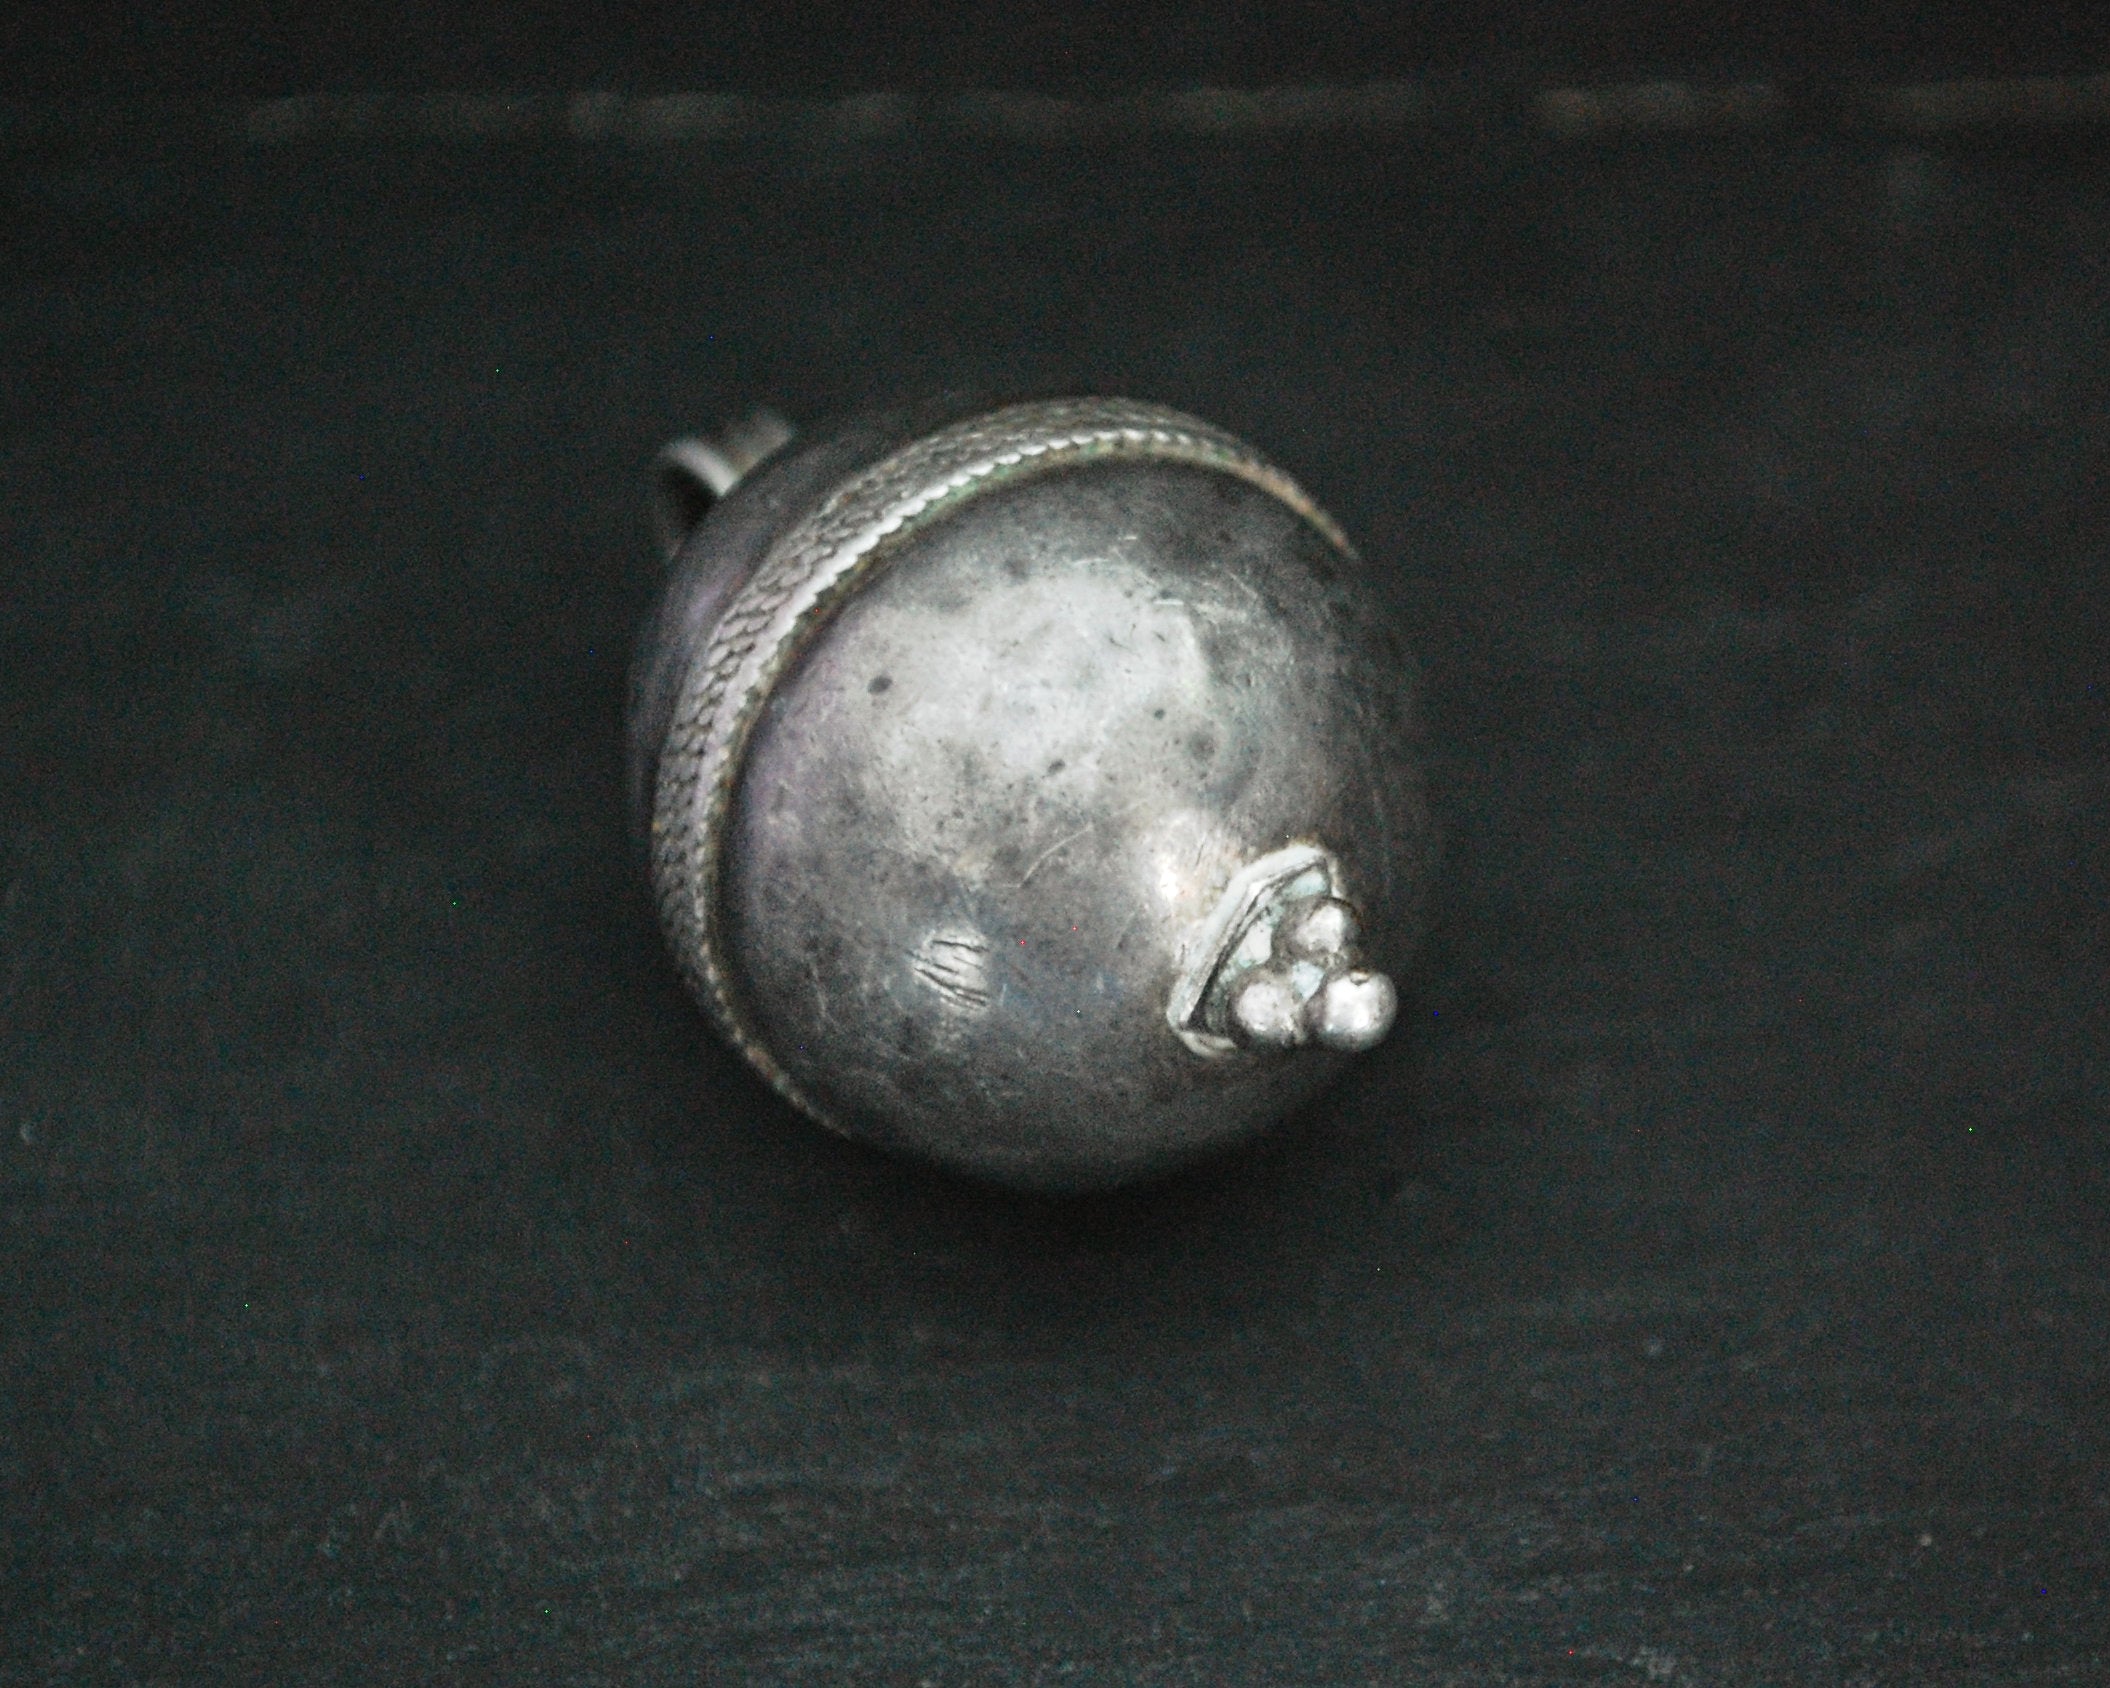 Turkmen Silver Bead Pendant